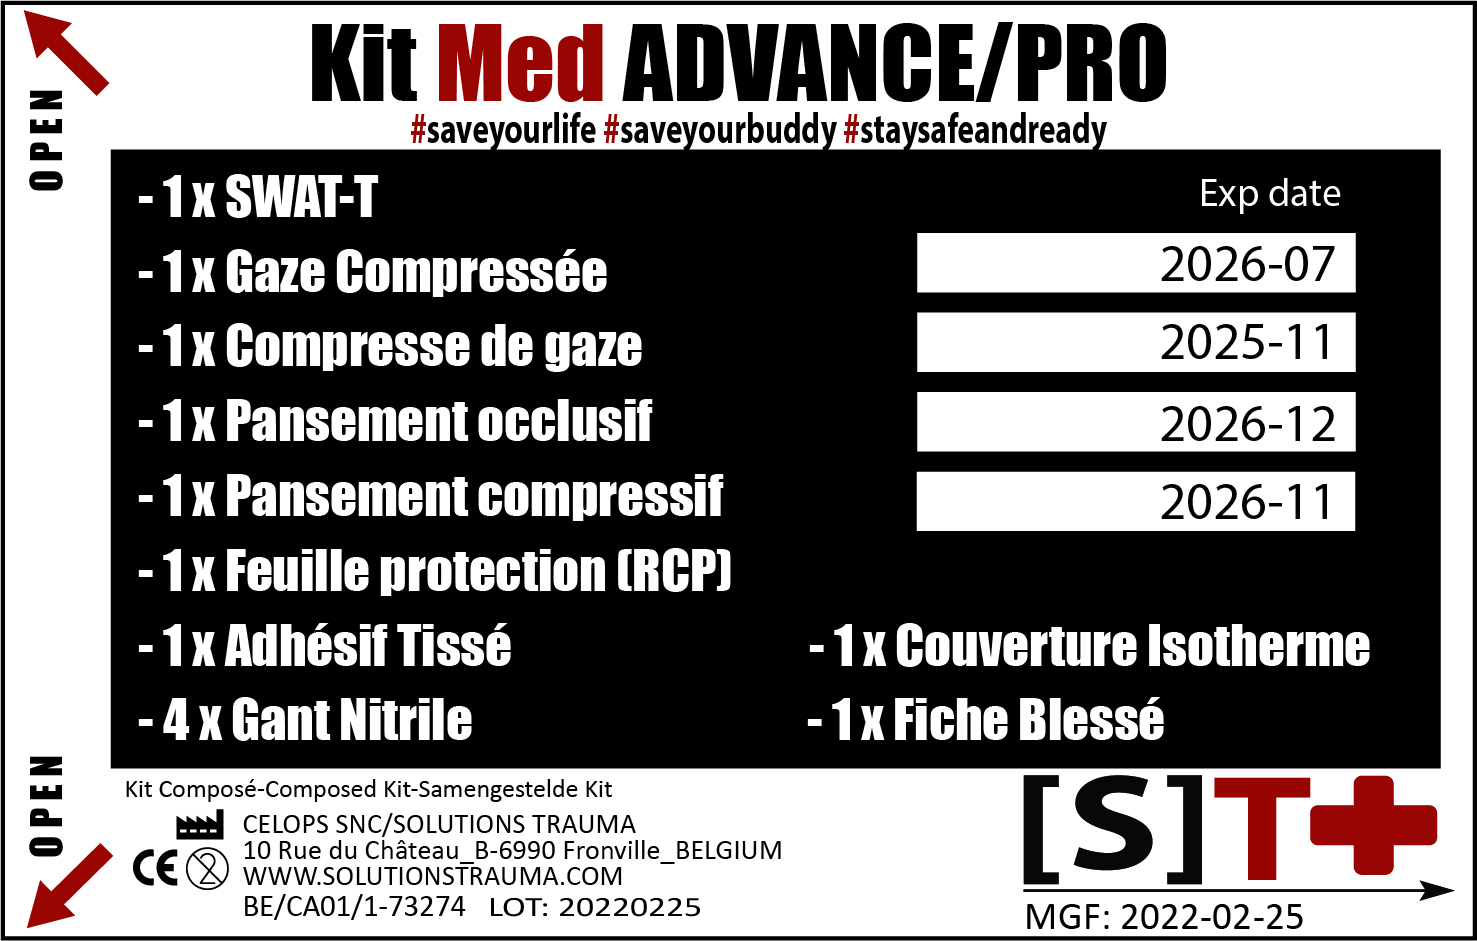 Kit Medical Advance